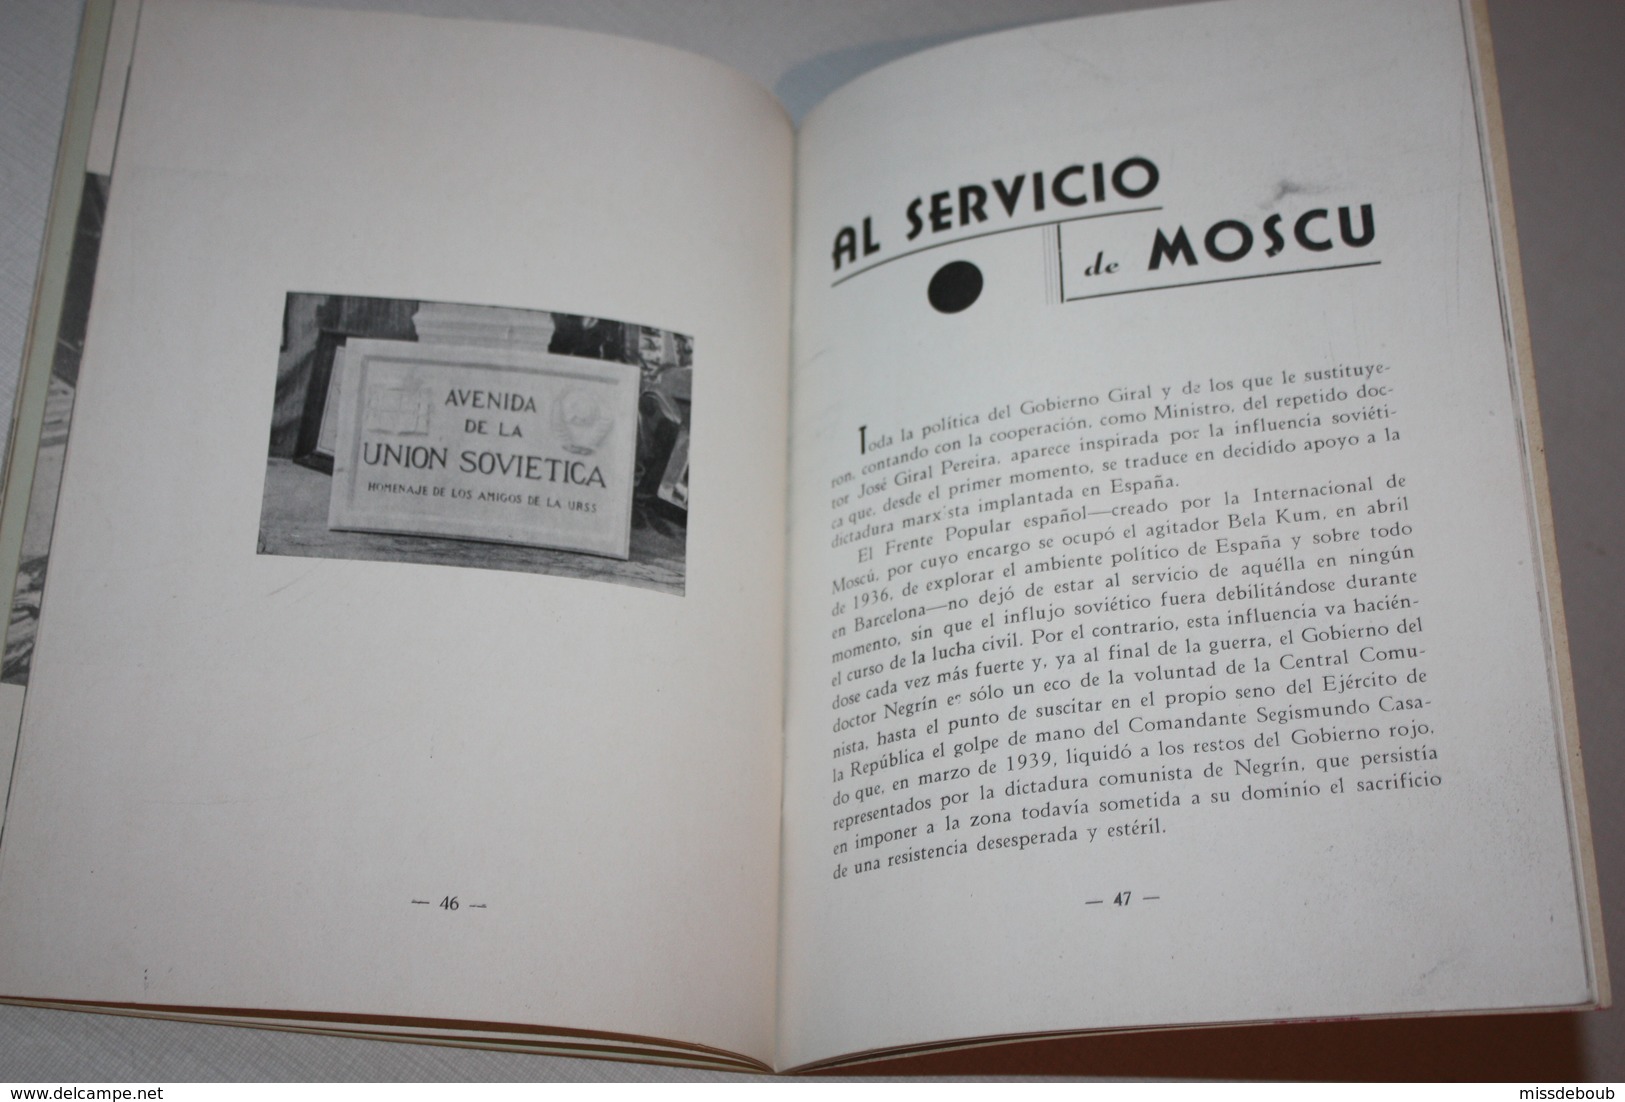 GIRAL O UNA HISTORIA DE SANGRE - EDICIONES COMBATE - Guerra Civil Española - fascismo